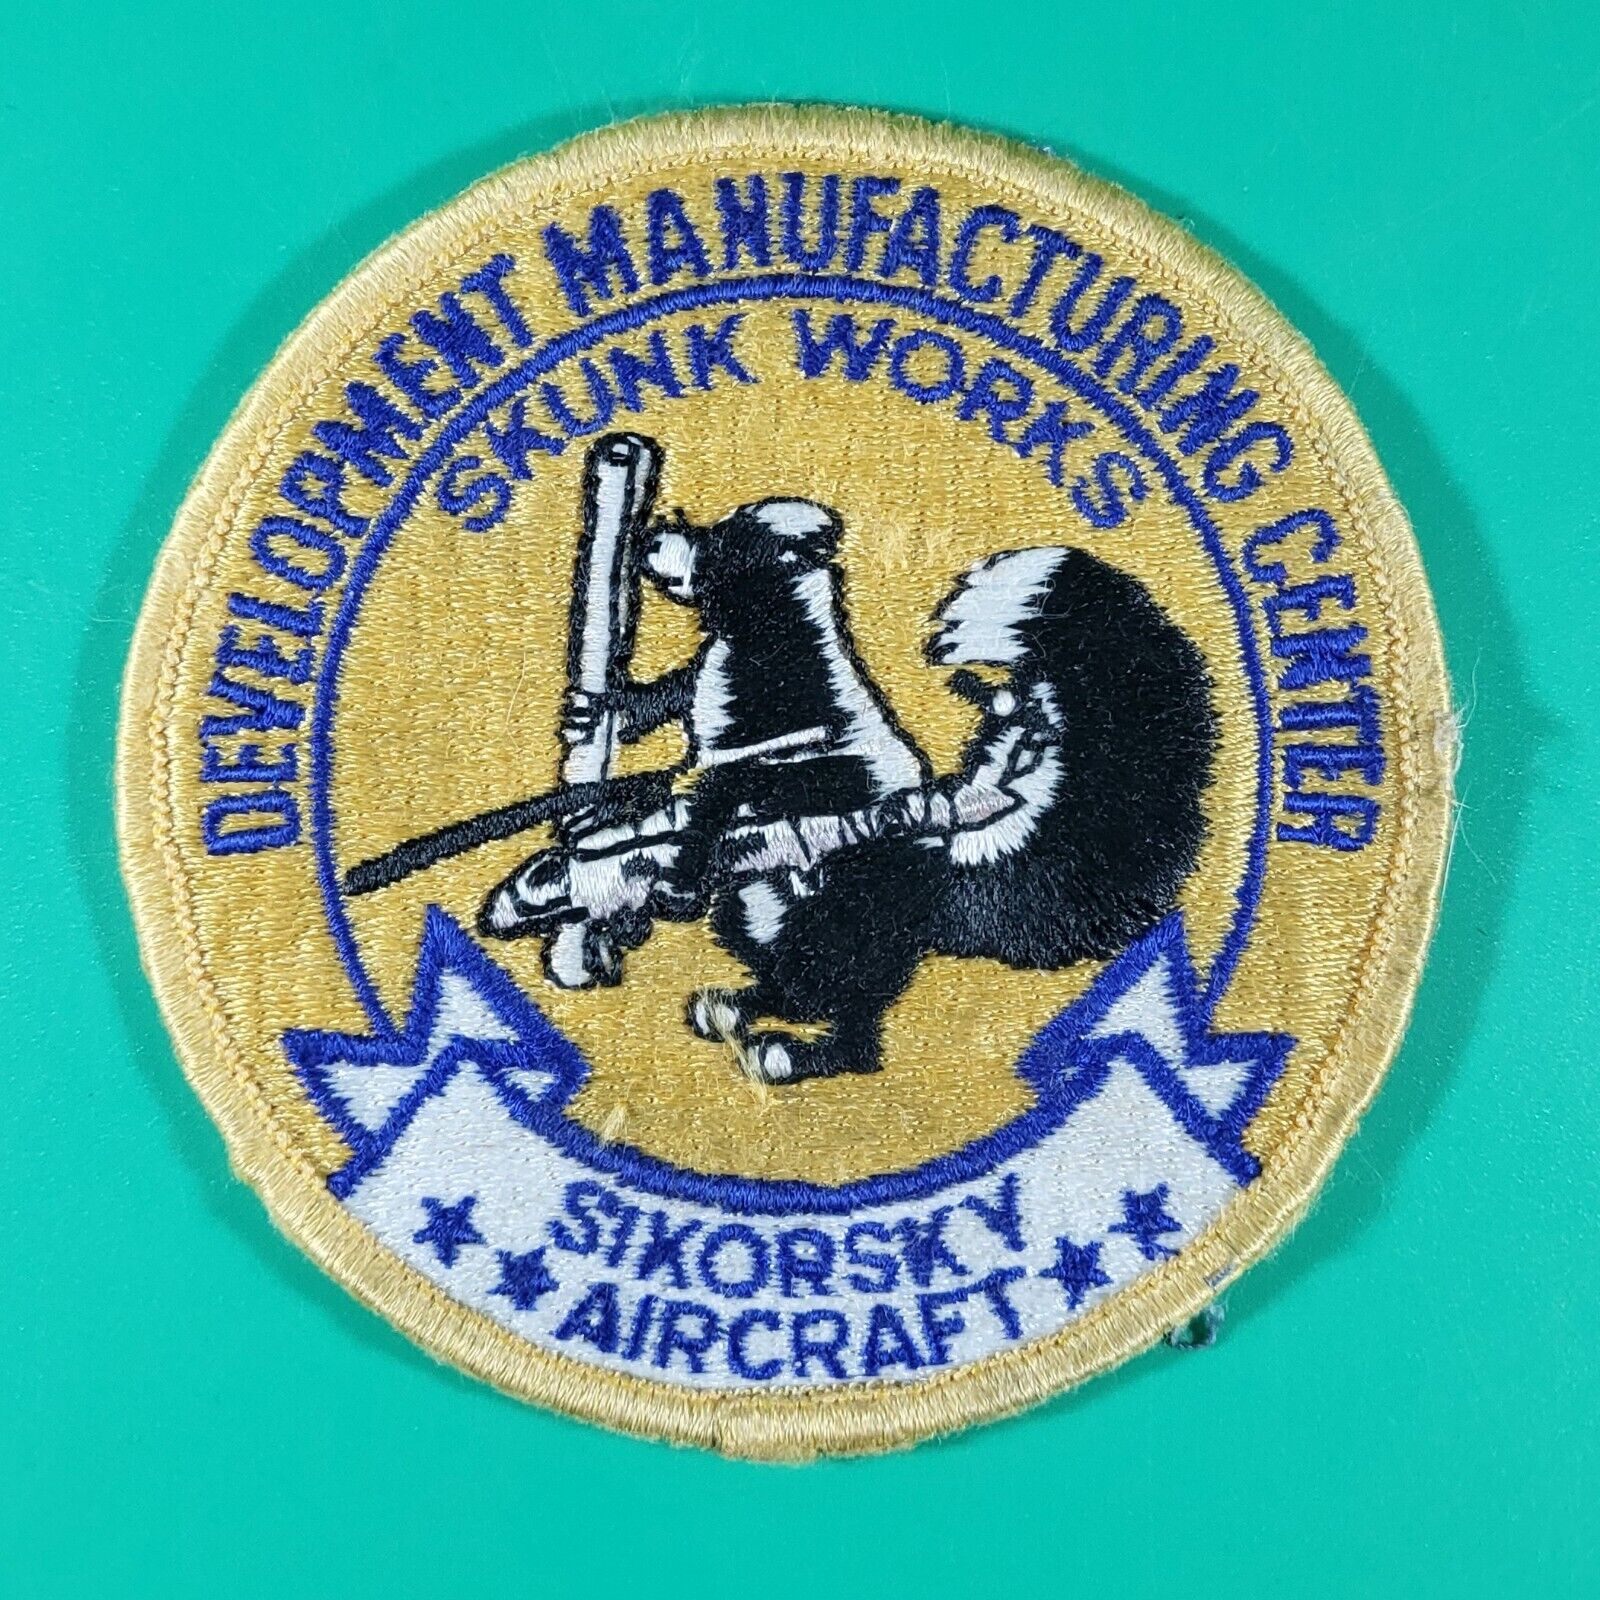 Sikorsky Aircraft Skunk Works Development Manufacturing Center Program Patch